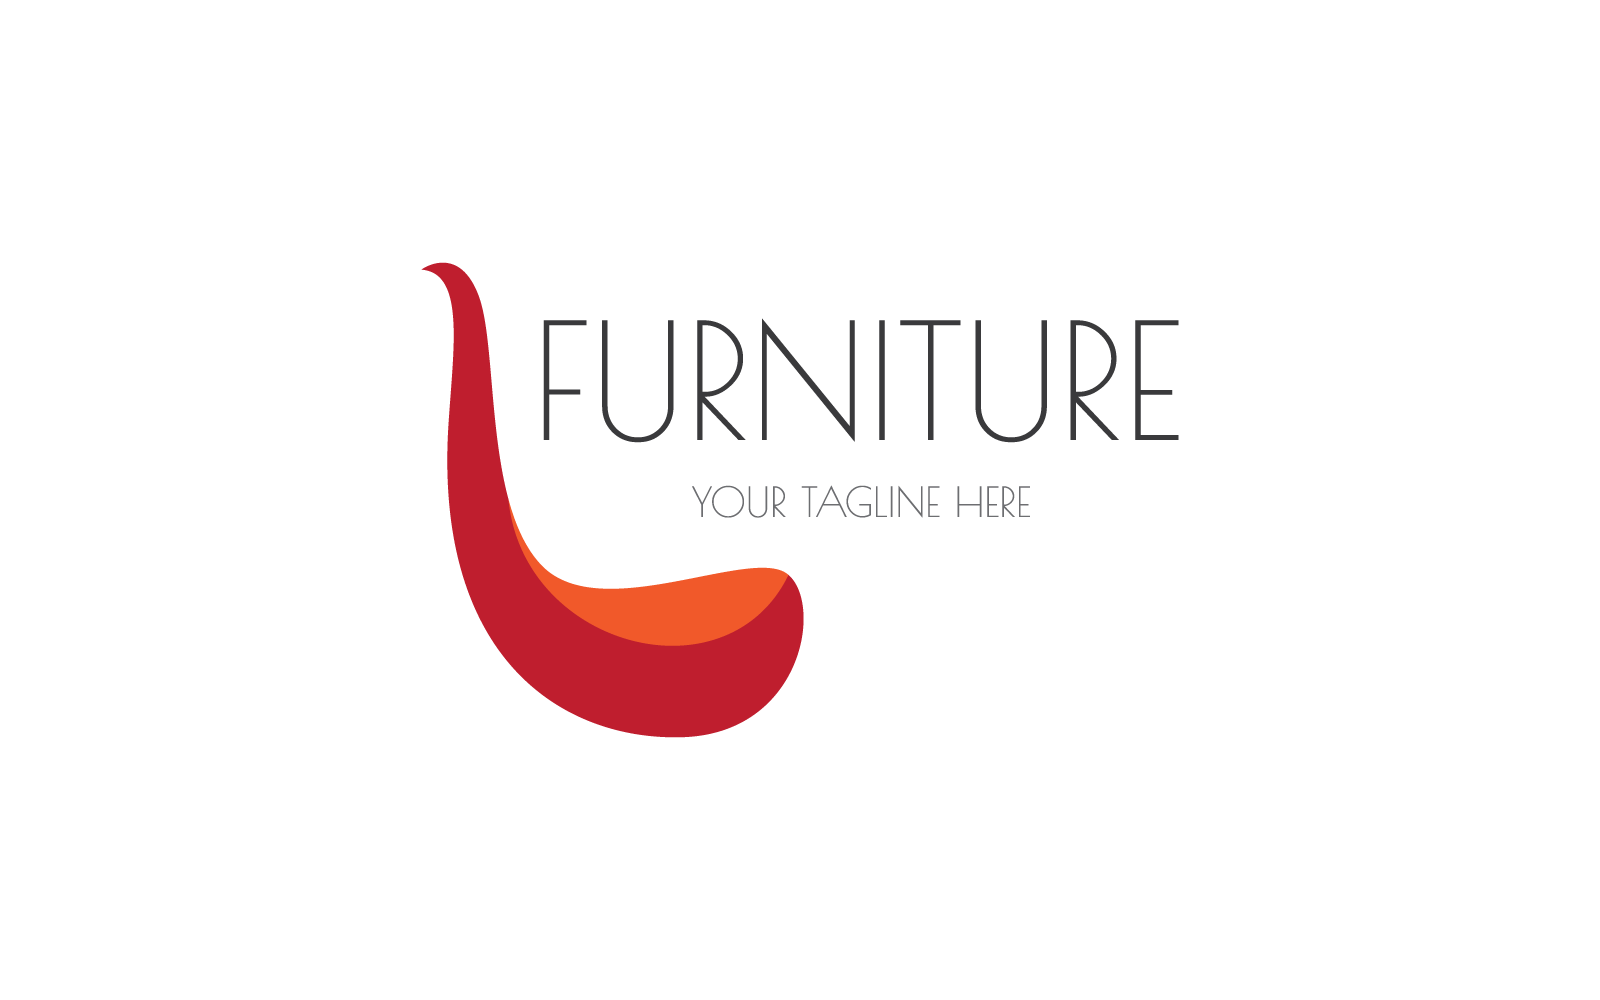 Furniture design vector illustration template